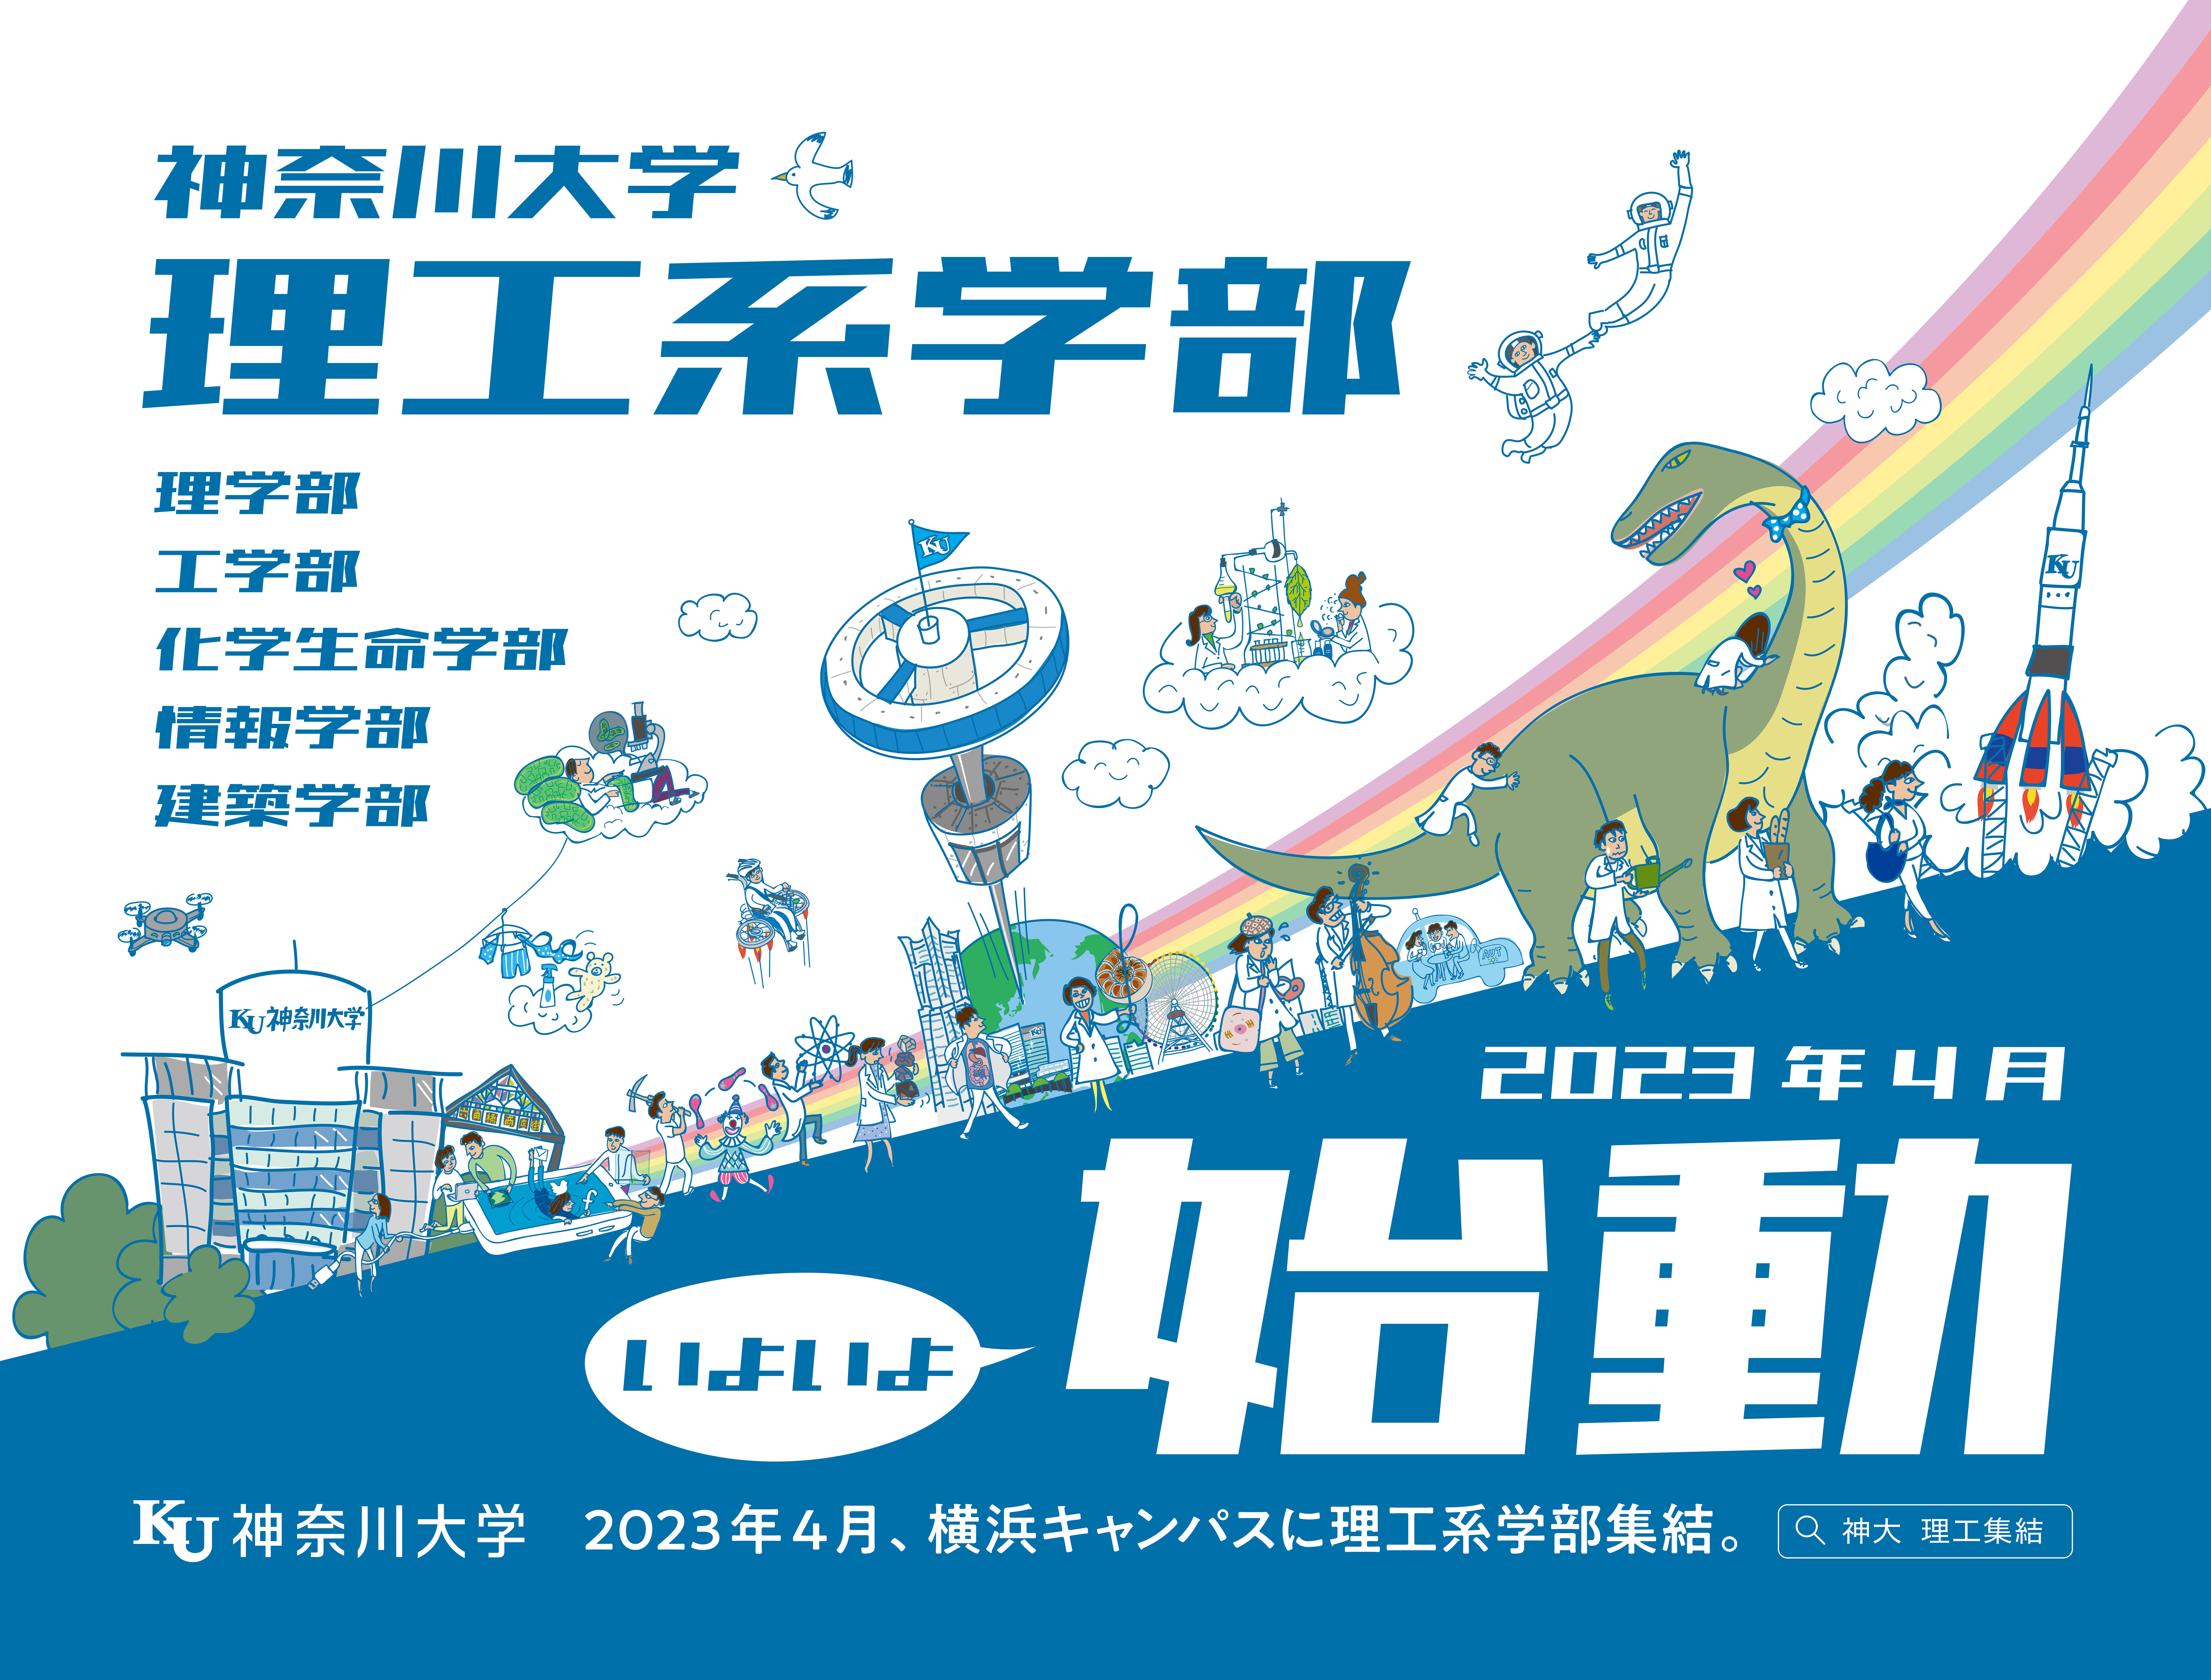 『YOKOHAMAから未来をかえる。』今年95周年を迎える神奈川大学の取り組み　理工系学部が横浜エリアに集結し、11学部22学科1プログラムへ。春のオープンキャンパス開催も決定